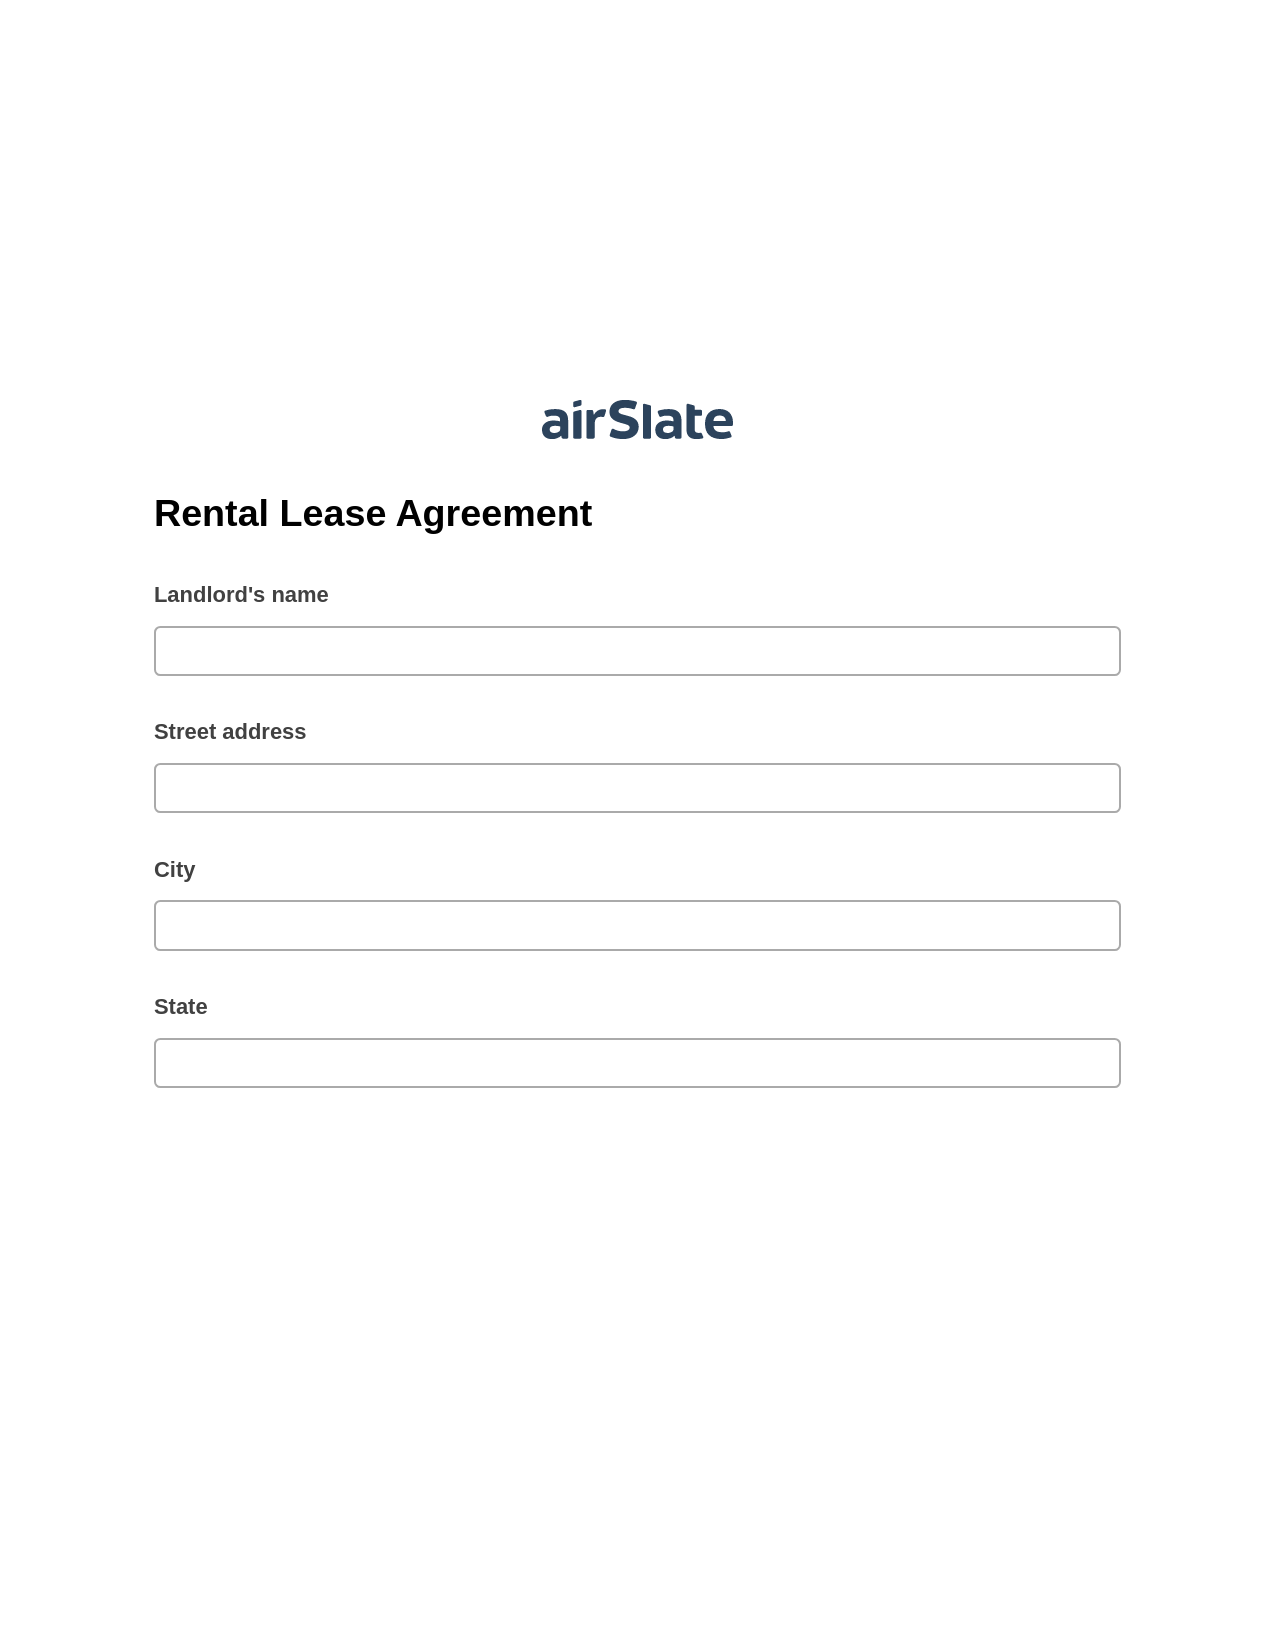 Rental Lease Agreement Pre-fill from MySQL Dropdown Options Bot, Invoke Salesforce Process Bot, Text Message Notification Postfinish Bot